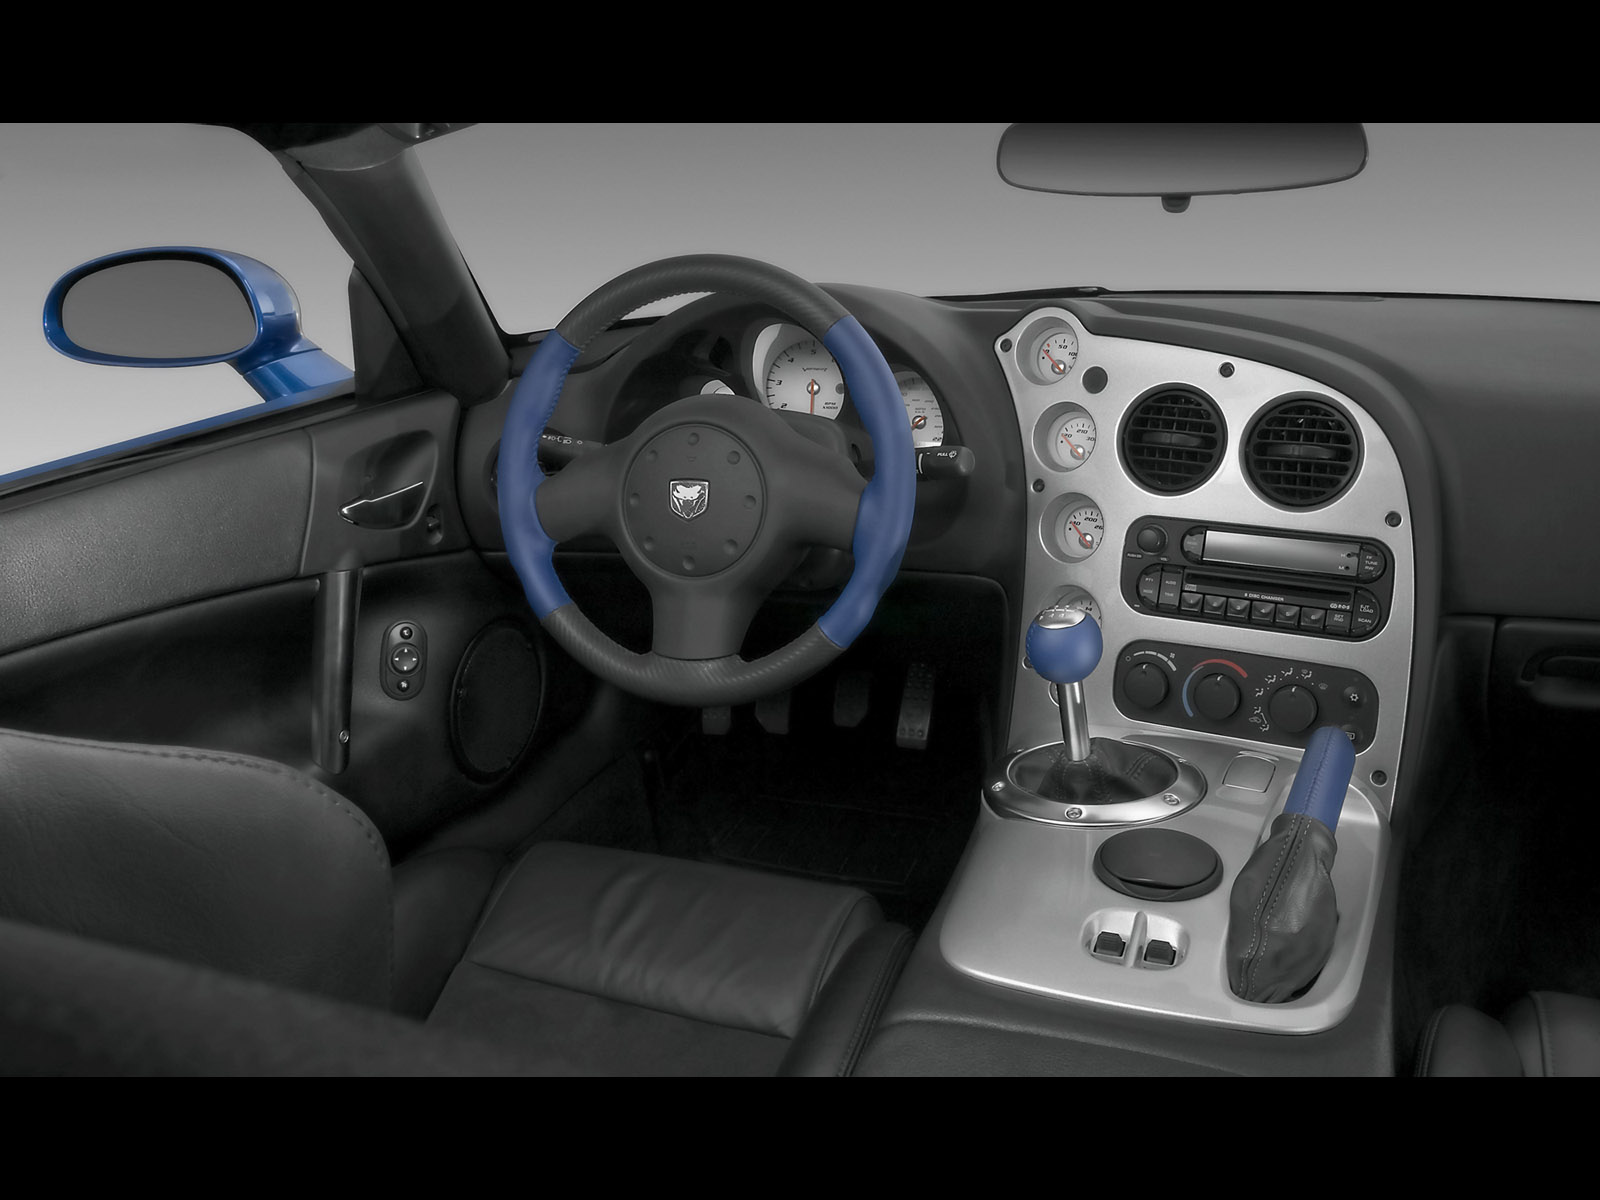 2006 Dodge Viper SRT10 Coupe - Interior - 1600x1200 Wallpaper